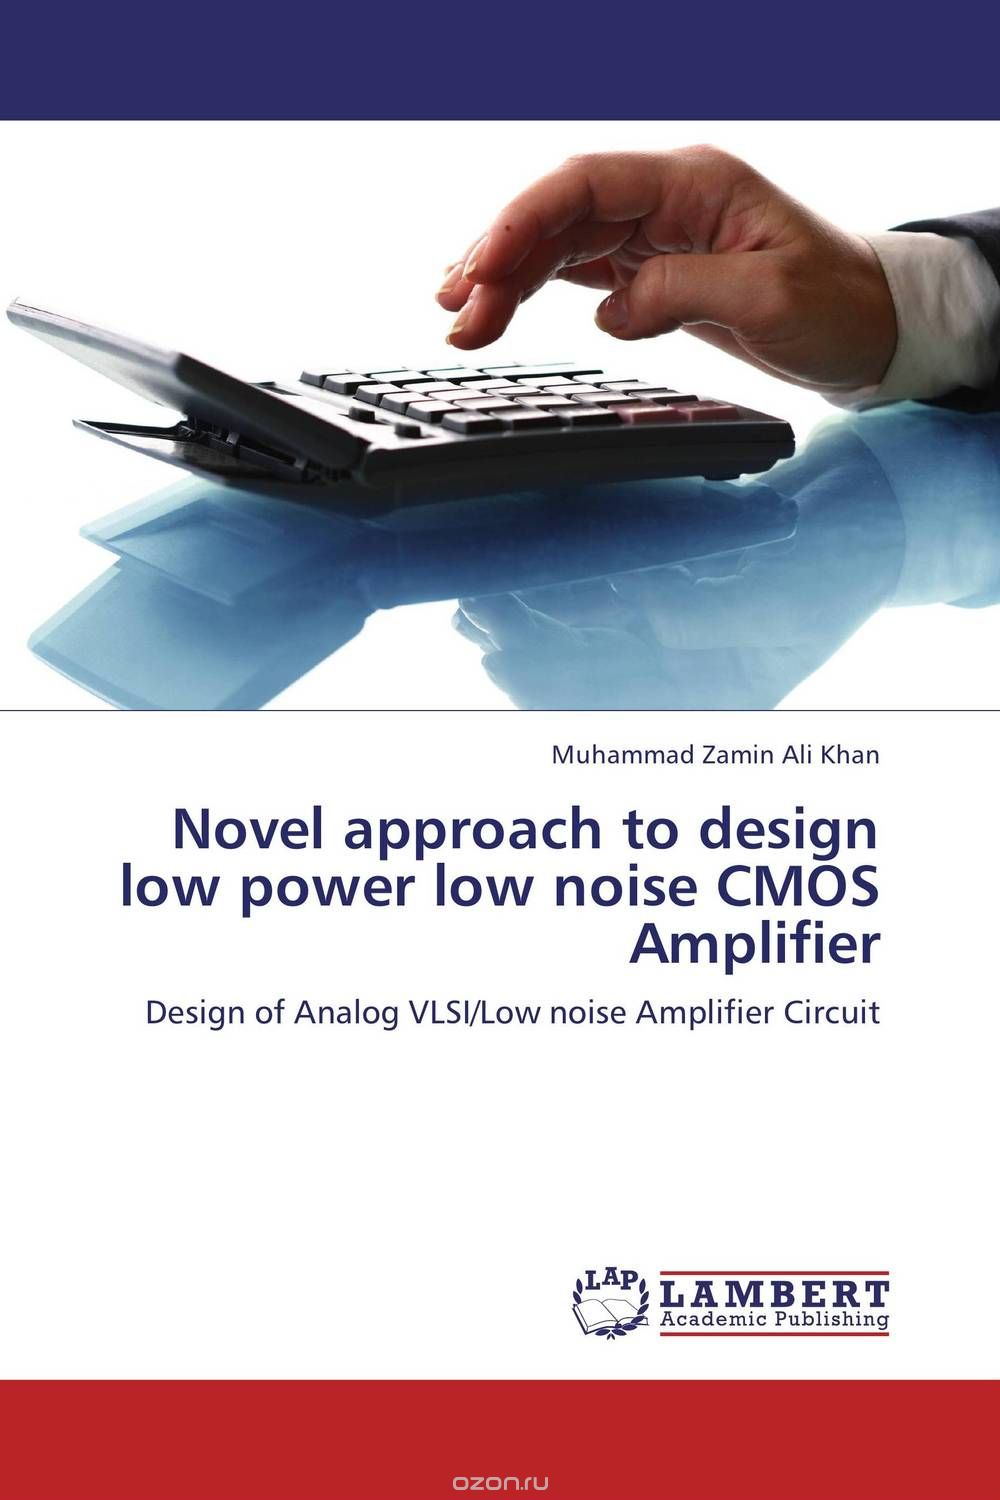 Скачать книгу "Novel approach to design  low power low noise CMOS Amplifier"